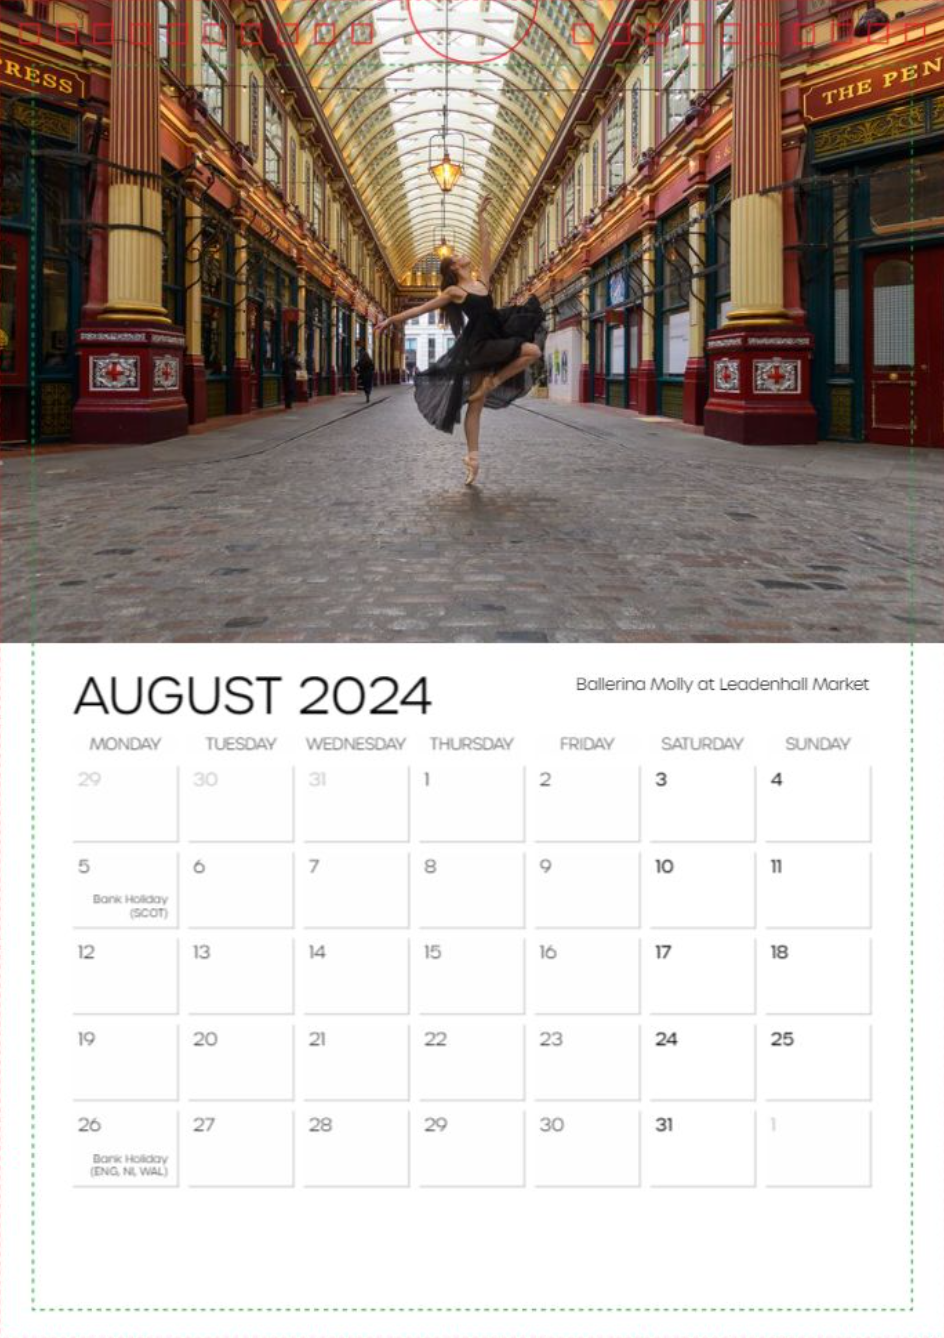 Photographic Calendar 2024 - August